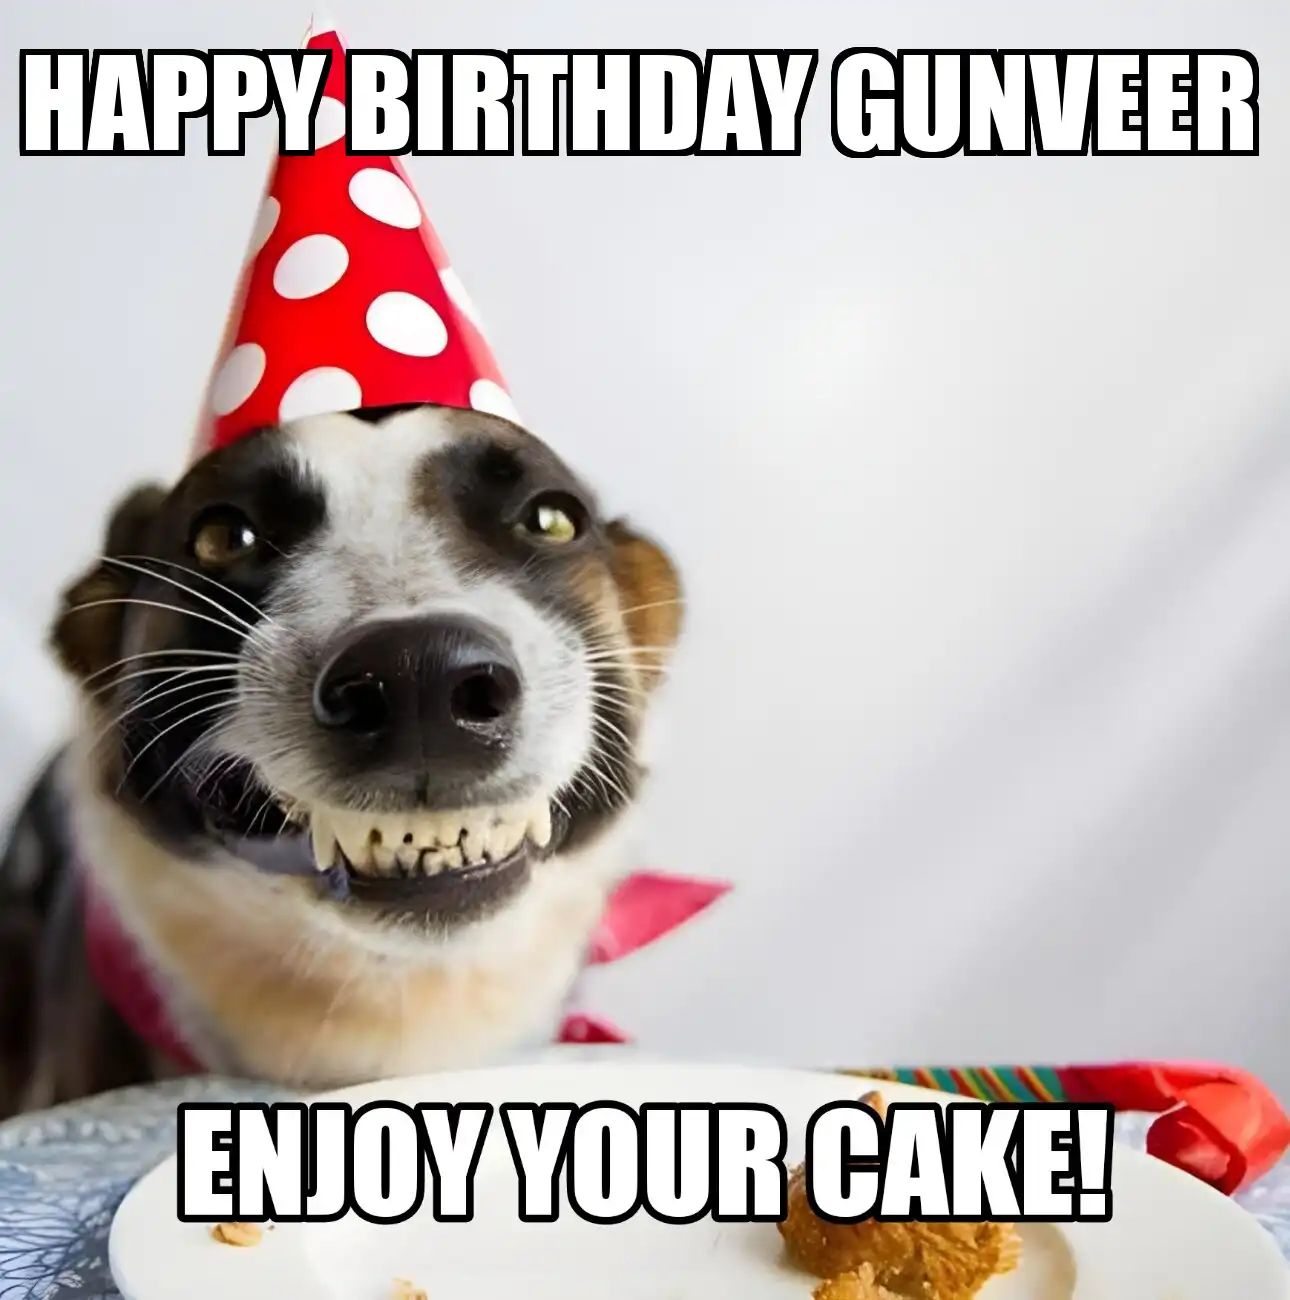 Happy Birthday Gunveer Enjoy Your Cake Dog Meme